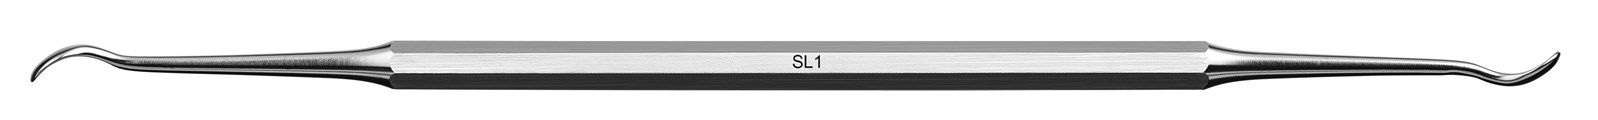 Instrument pro sinus lift - SL1, ADEP tmavě zelený